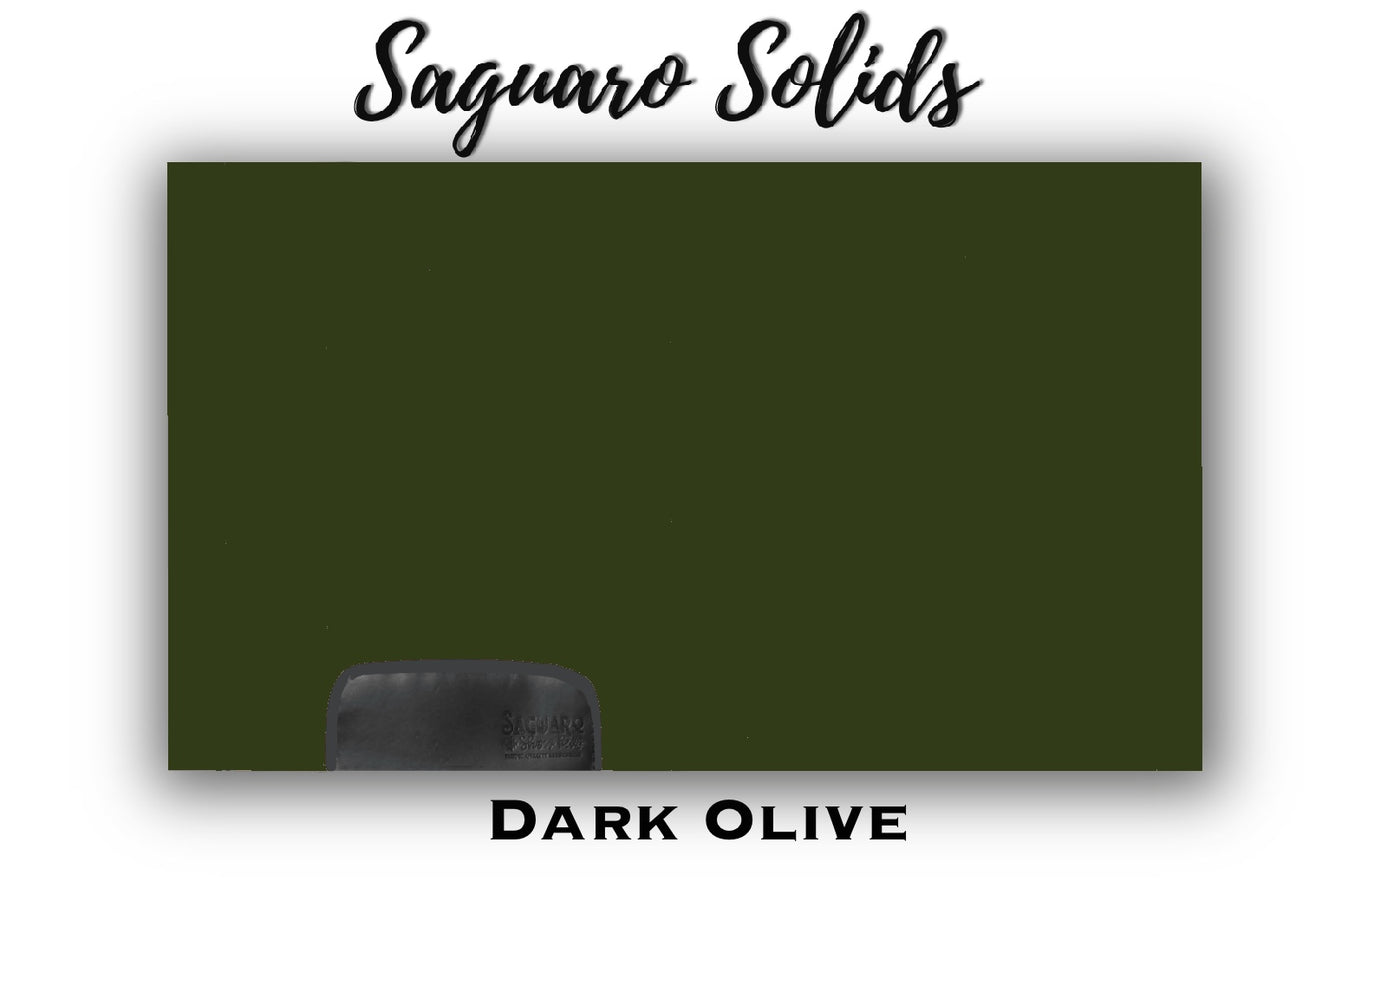 Saguaro Solid "Dark Olive" Show Pad (SEMI-CUSTOM)